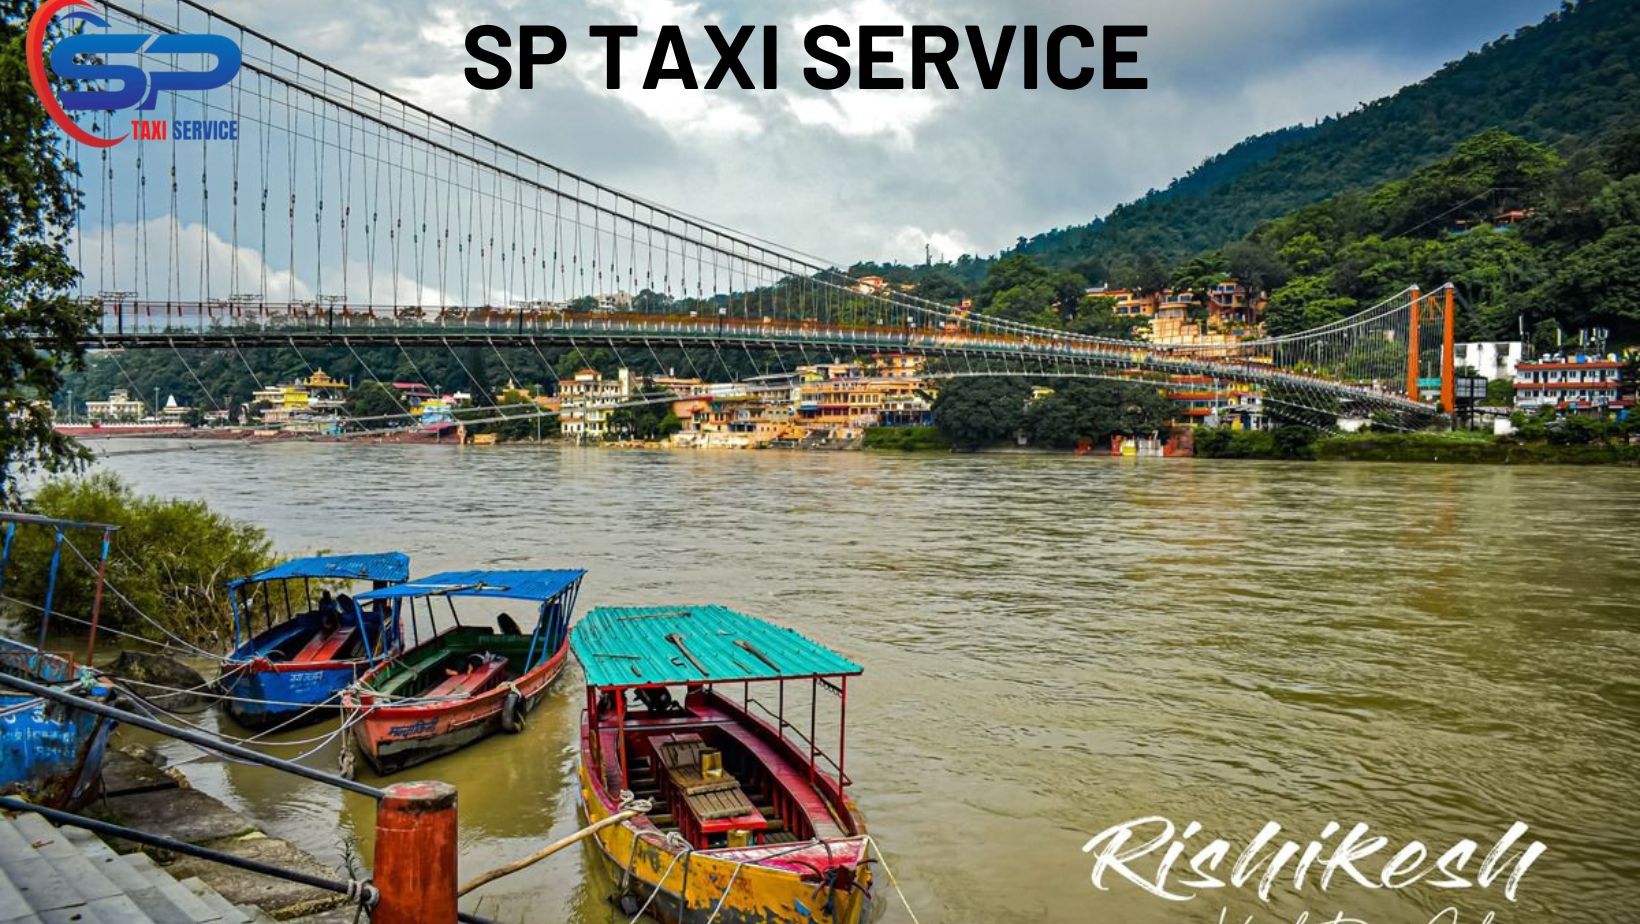 Rishikesh Taxi service